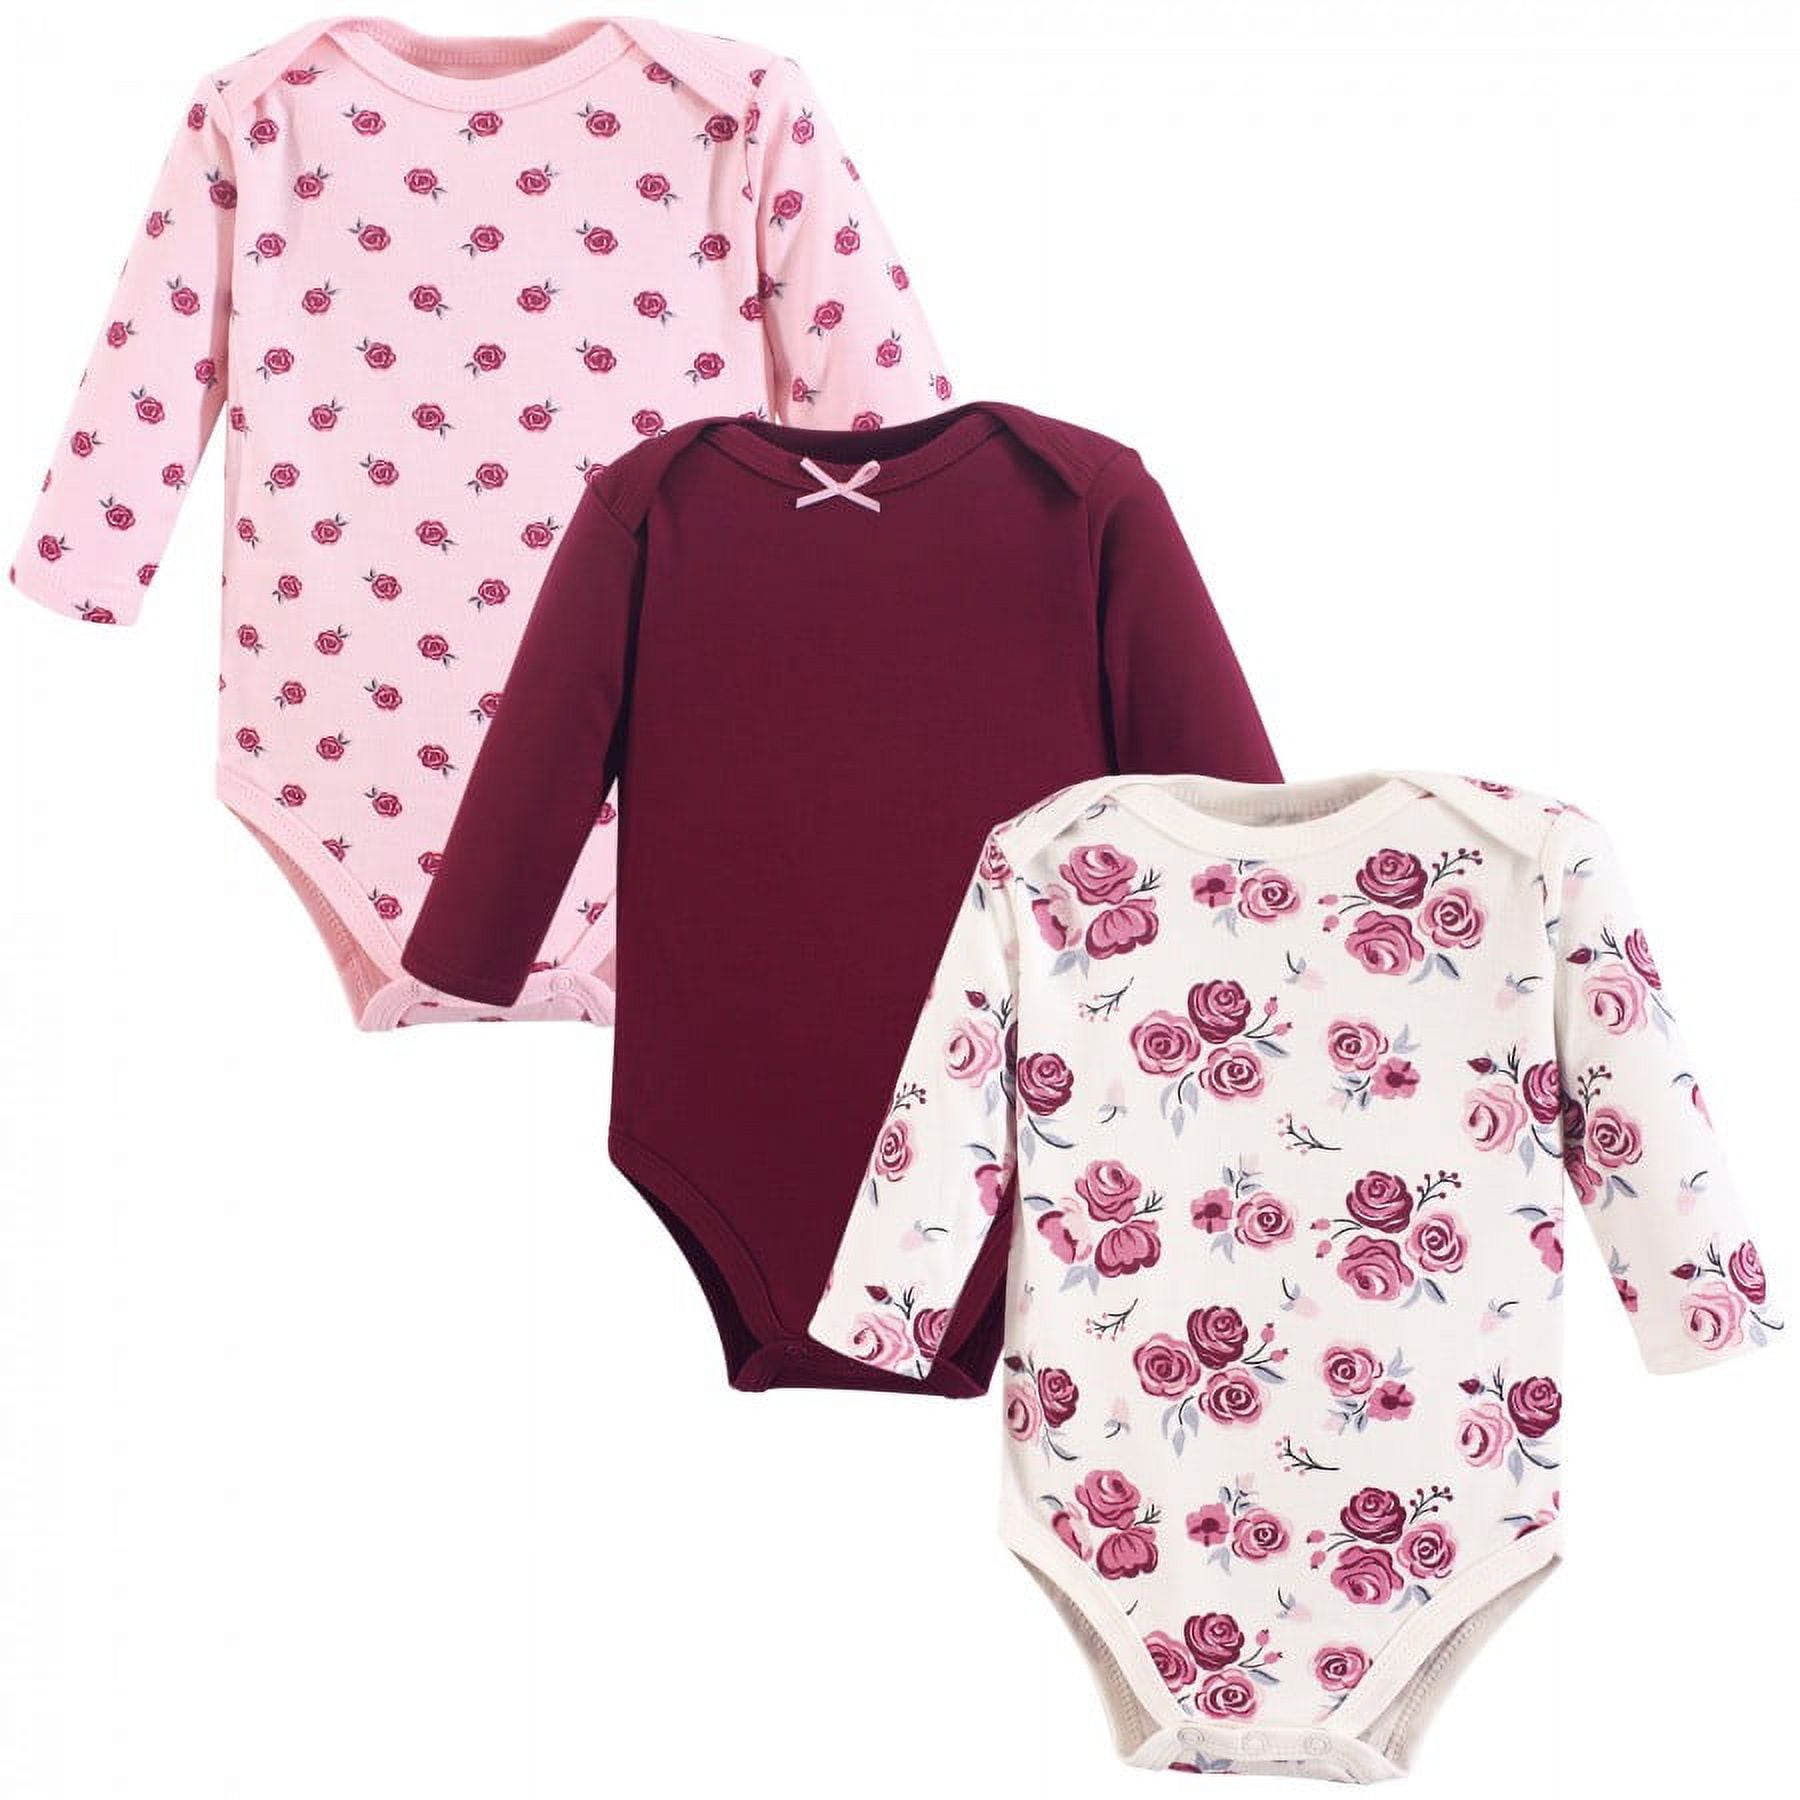 Hudson Baby Infant Girl Cotton Long-Sleeve Bodysuits 3pk, Rose, 9-12 Months